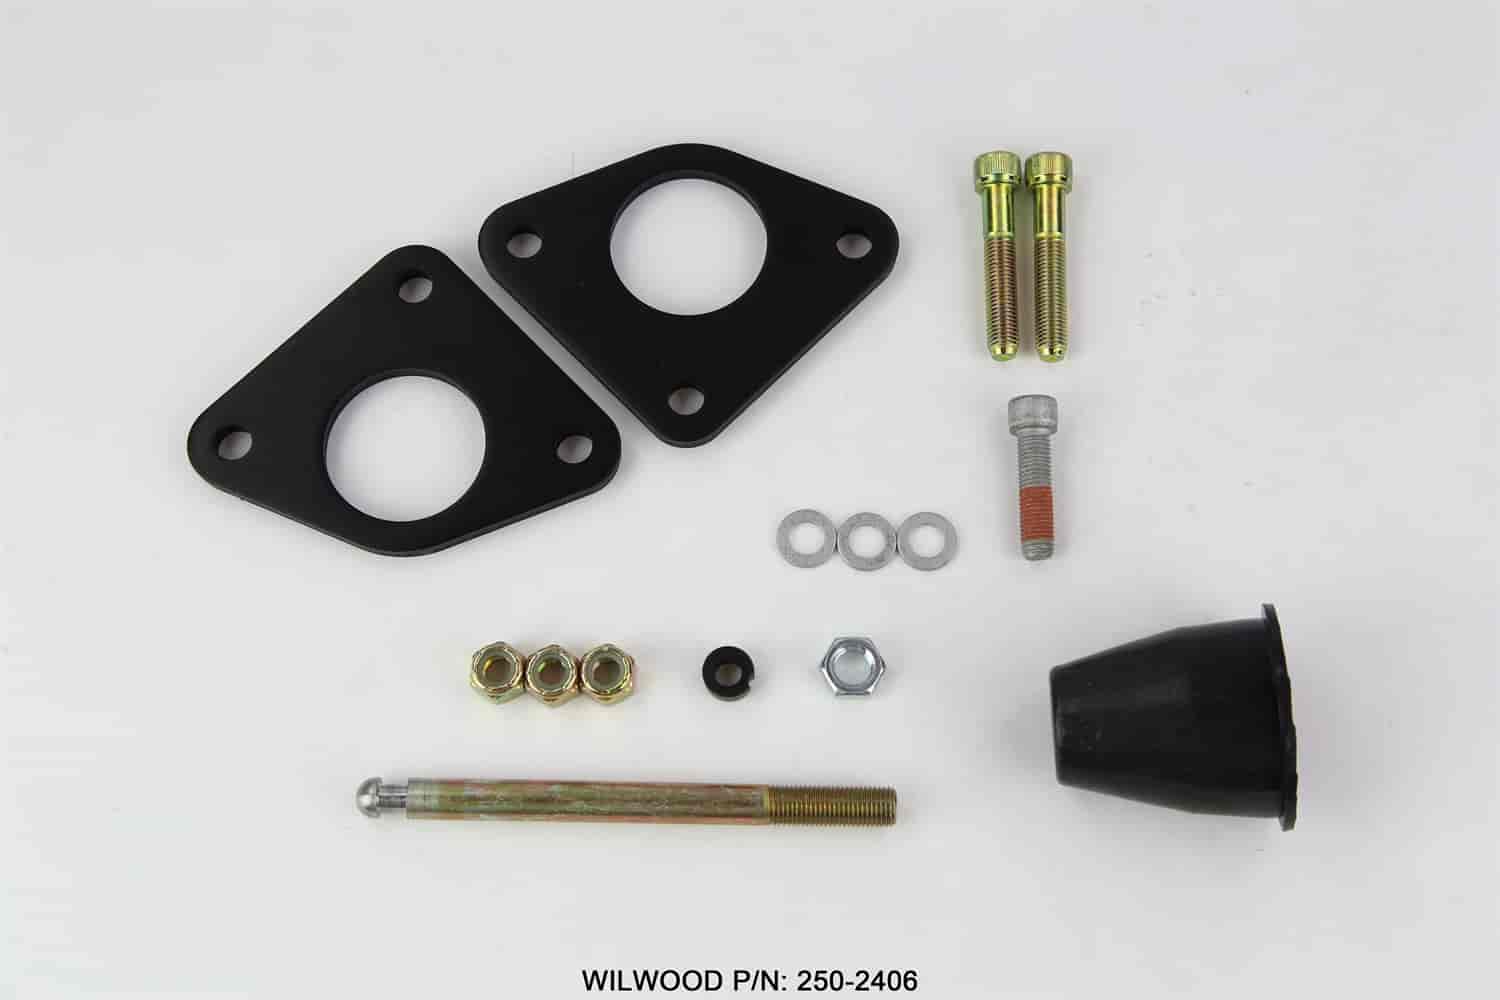 Reinforcement Bracket Kit Fits Wilwood Tandem & Chrysler Style Master Cylinders